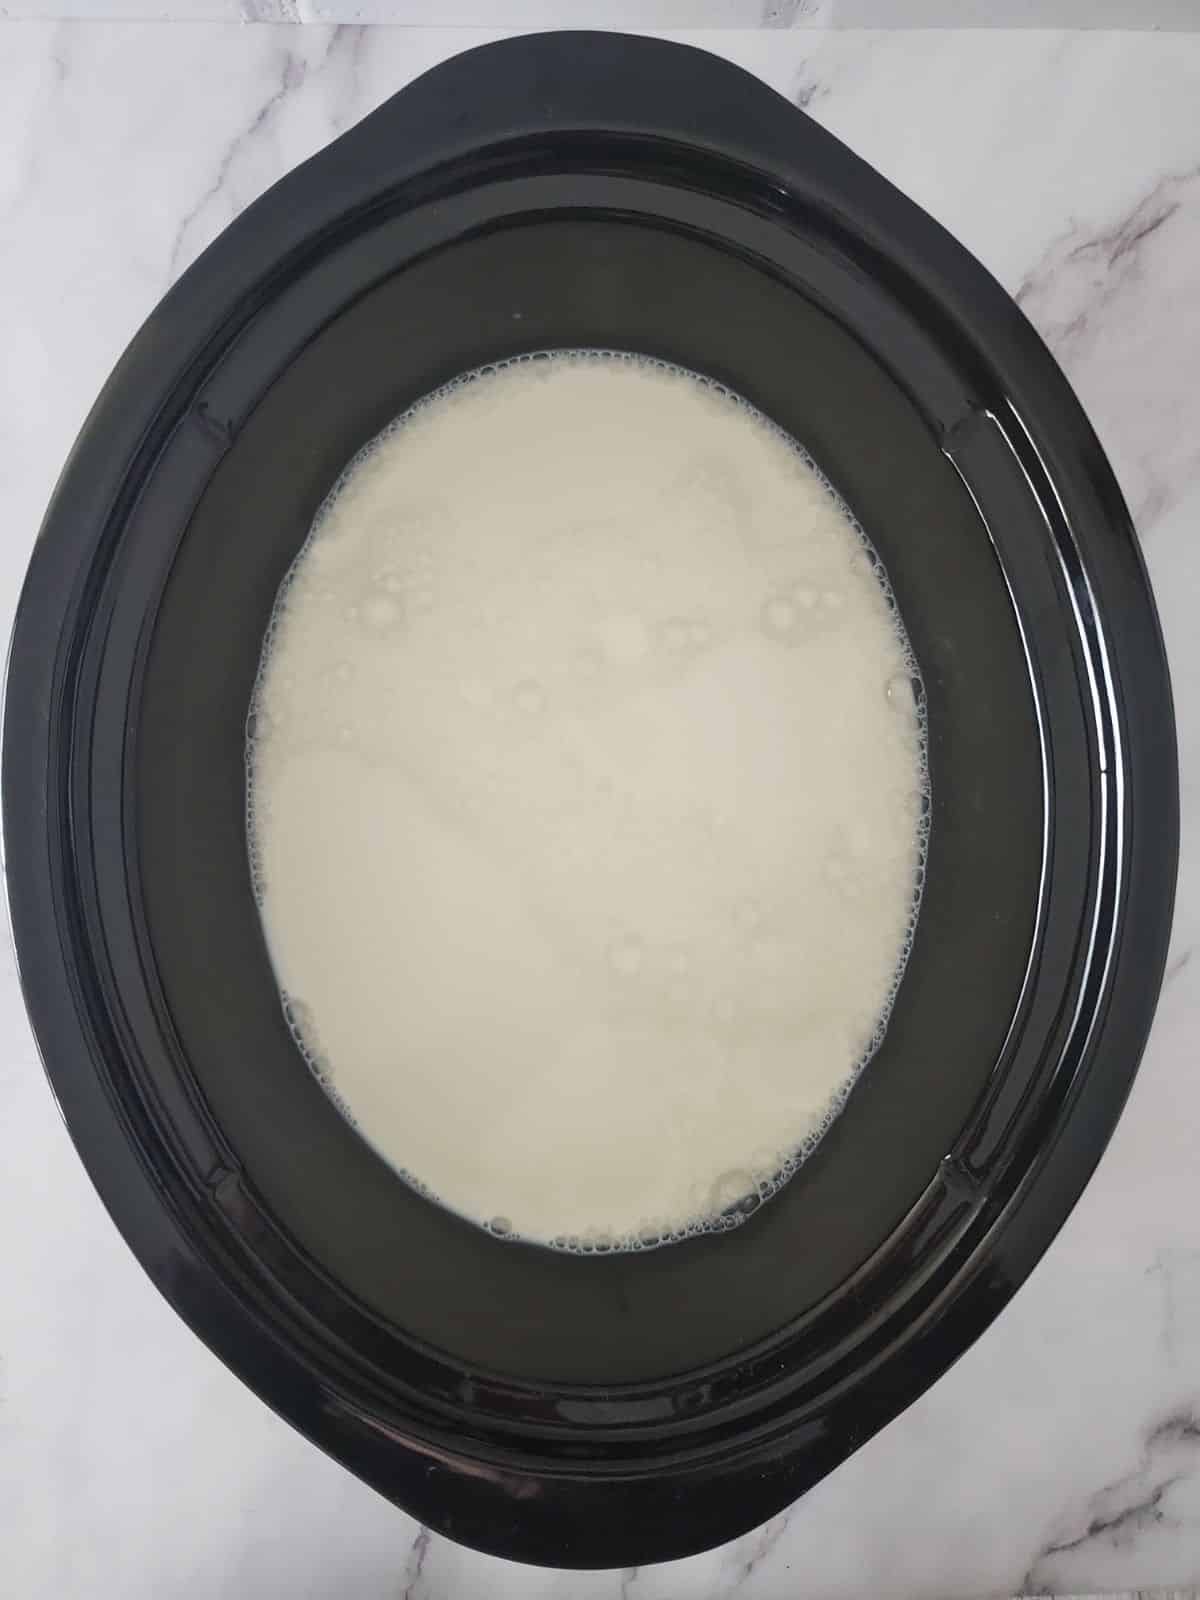 Milk in crock pot for homemade yogurt.